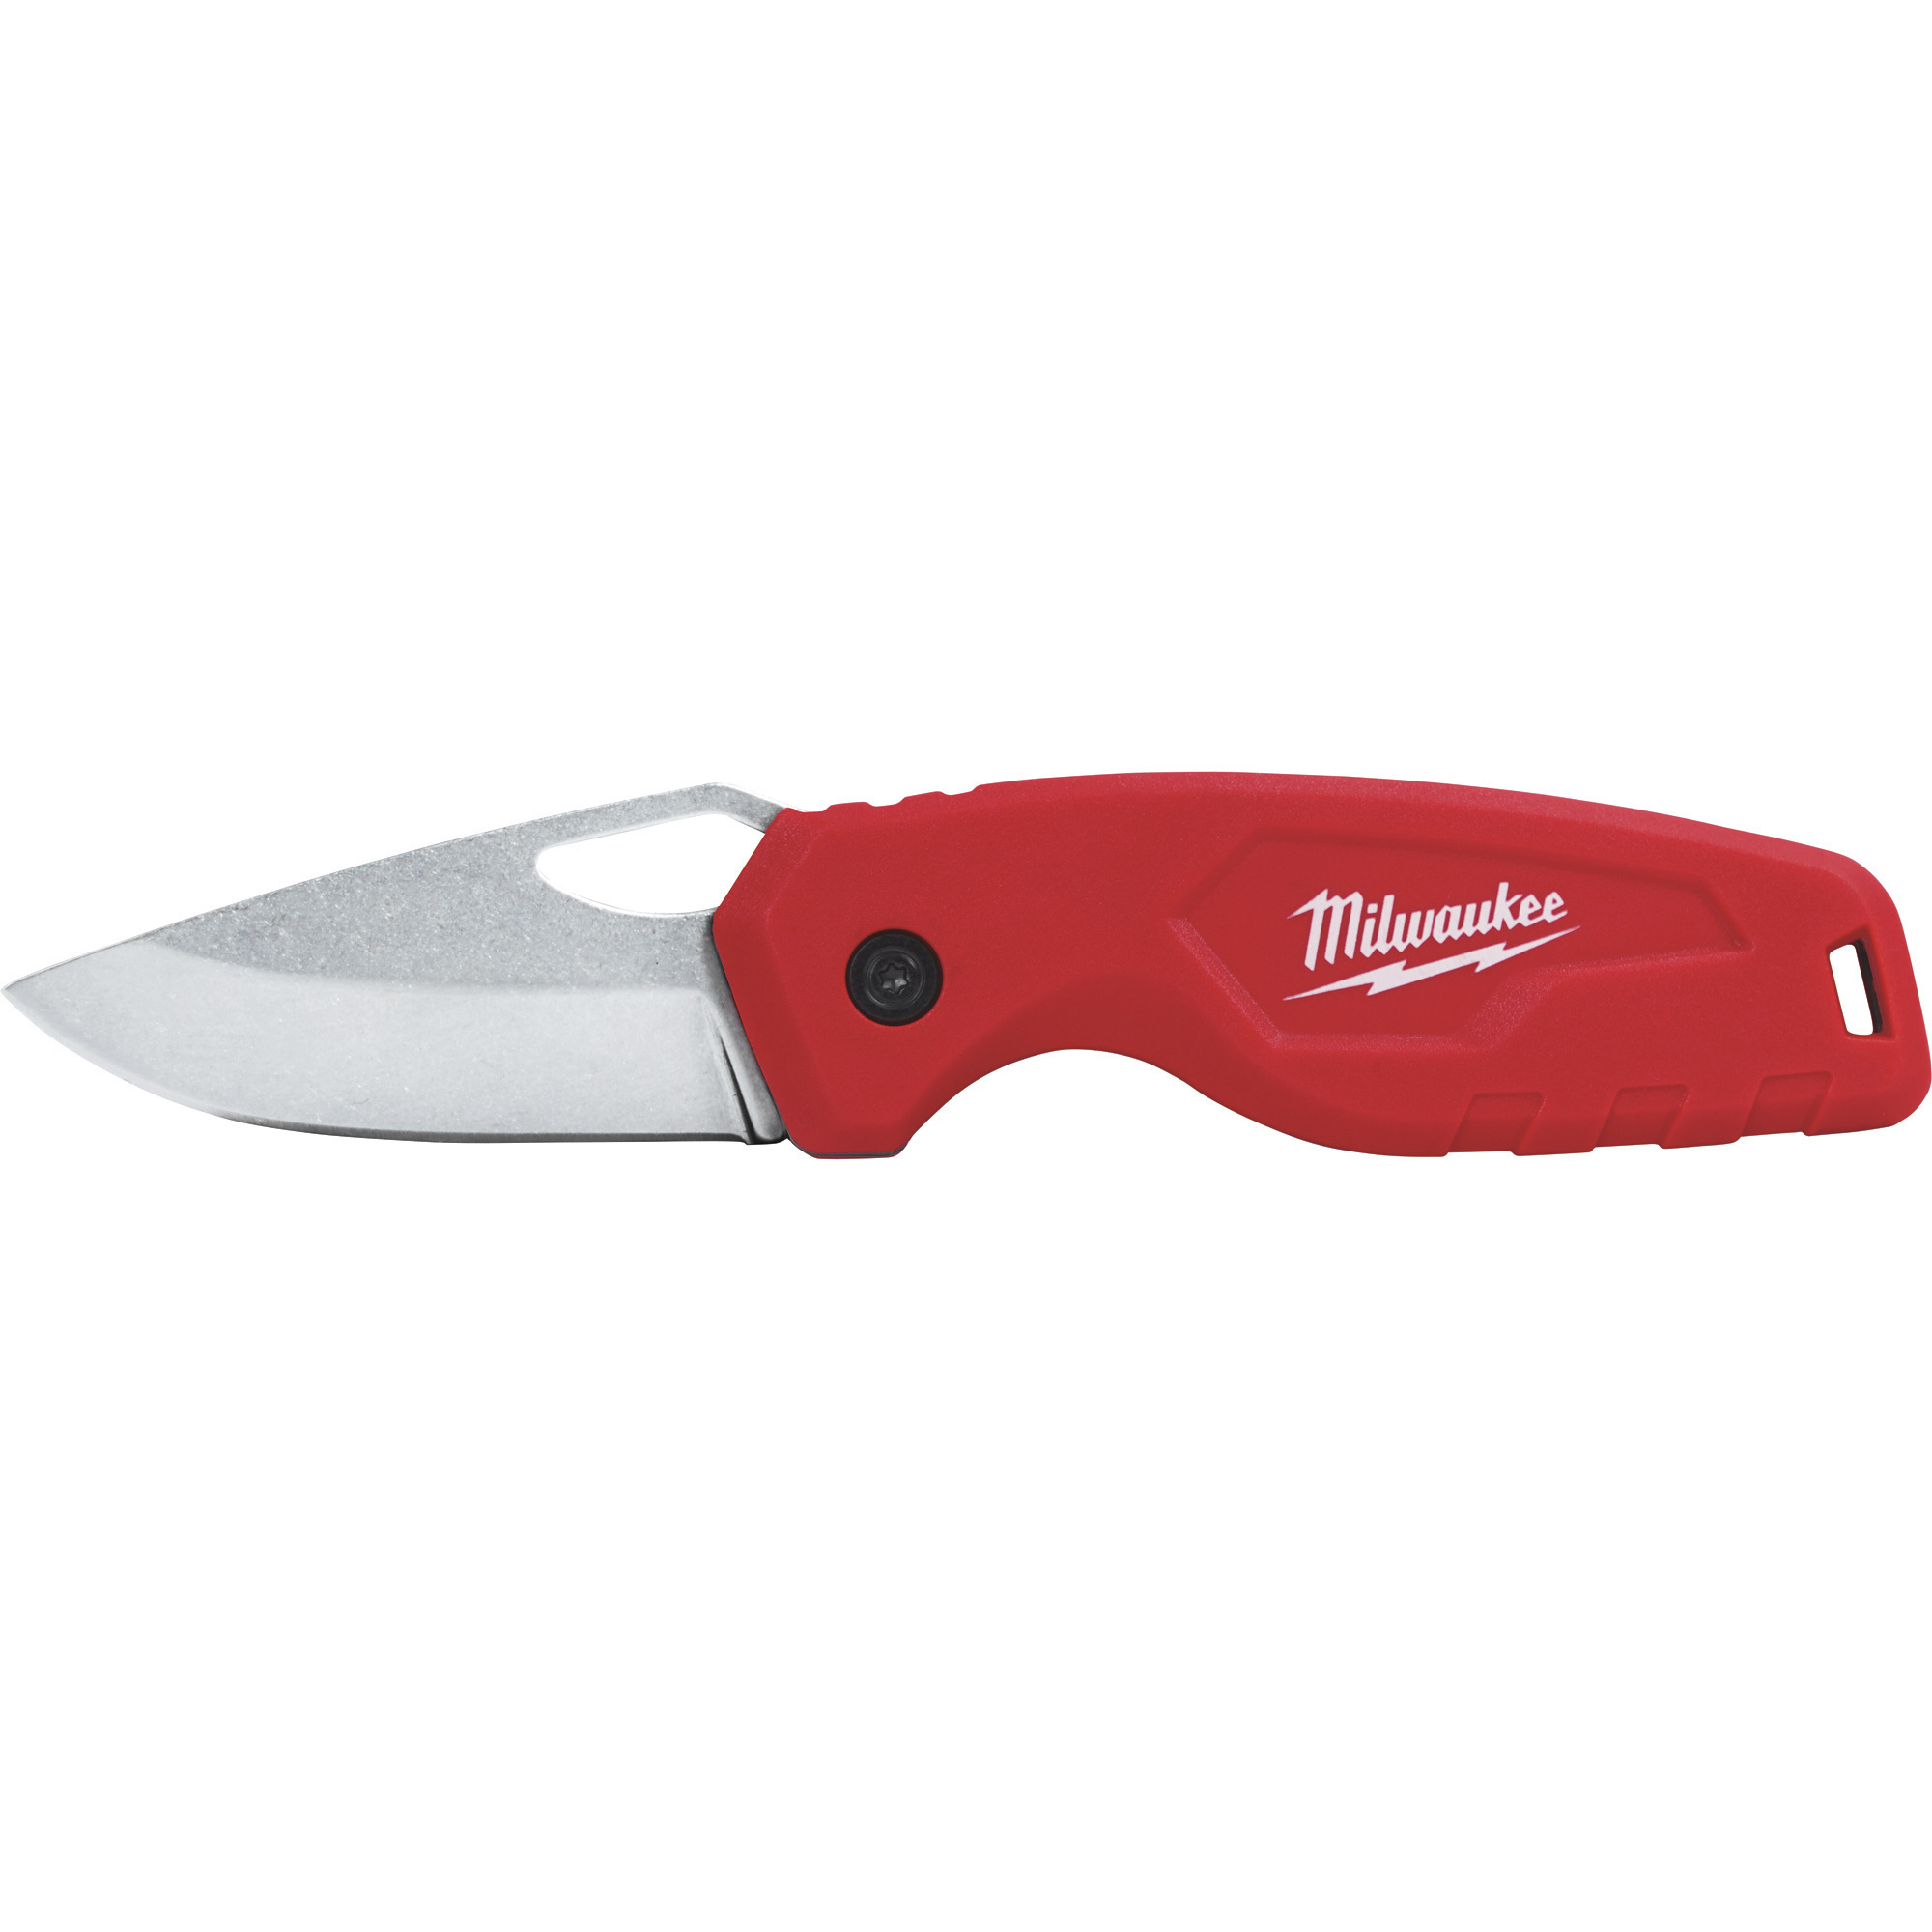 Milwaukee Compact Folding Knife, Model 48-22-1521